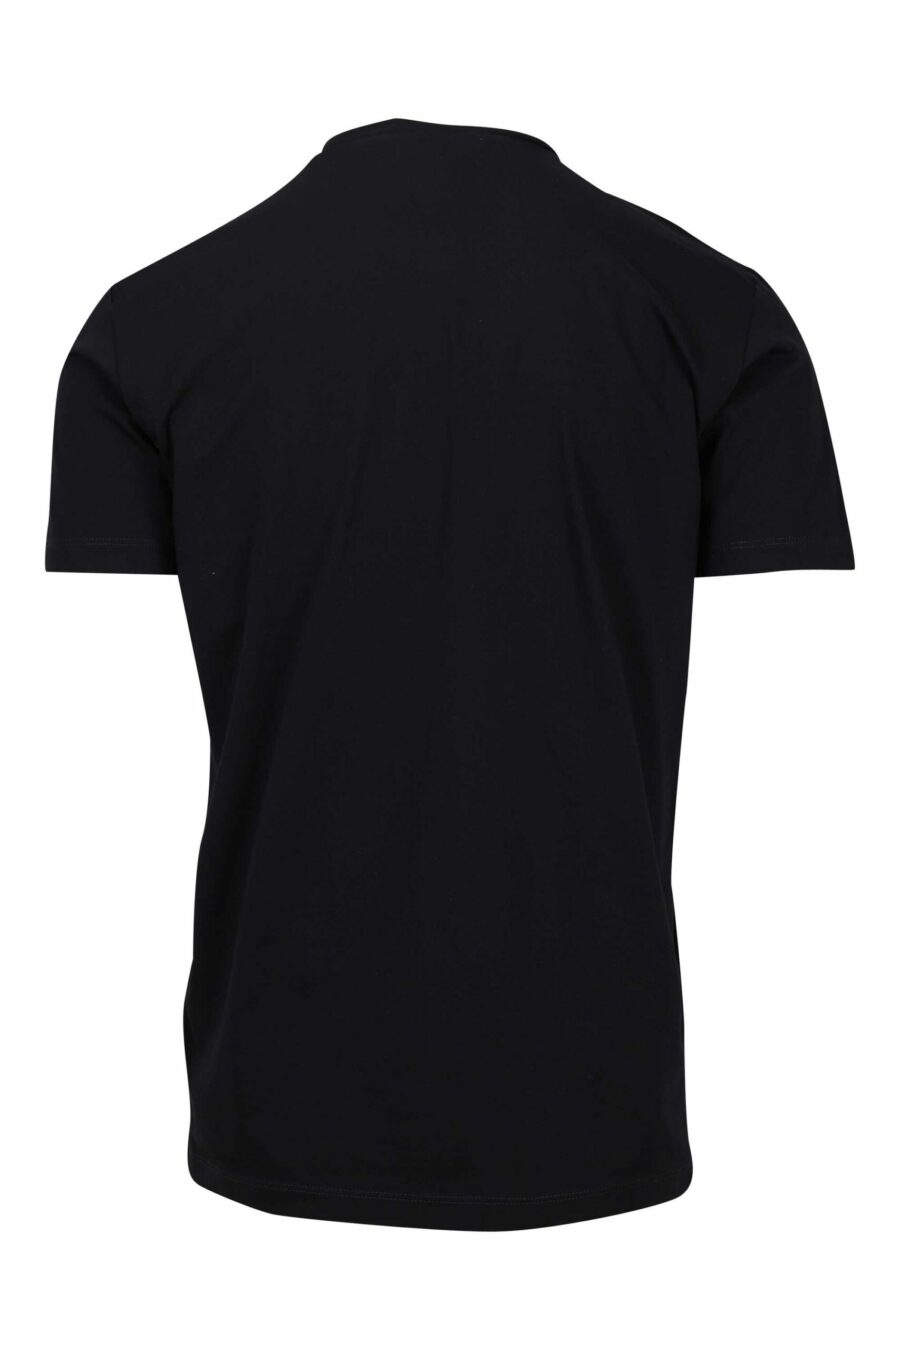 T-shirt noir avec maxilogo "icon" carré - 8052134981047 1 scaled